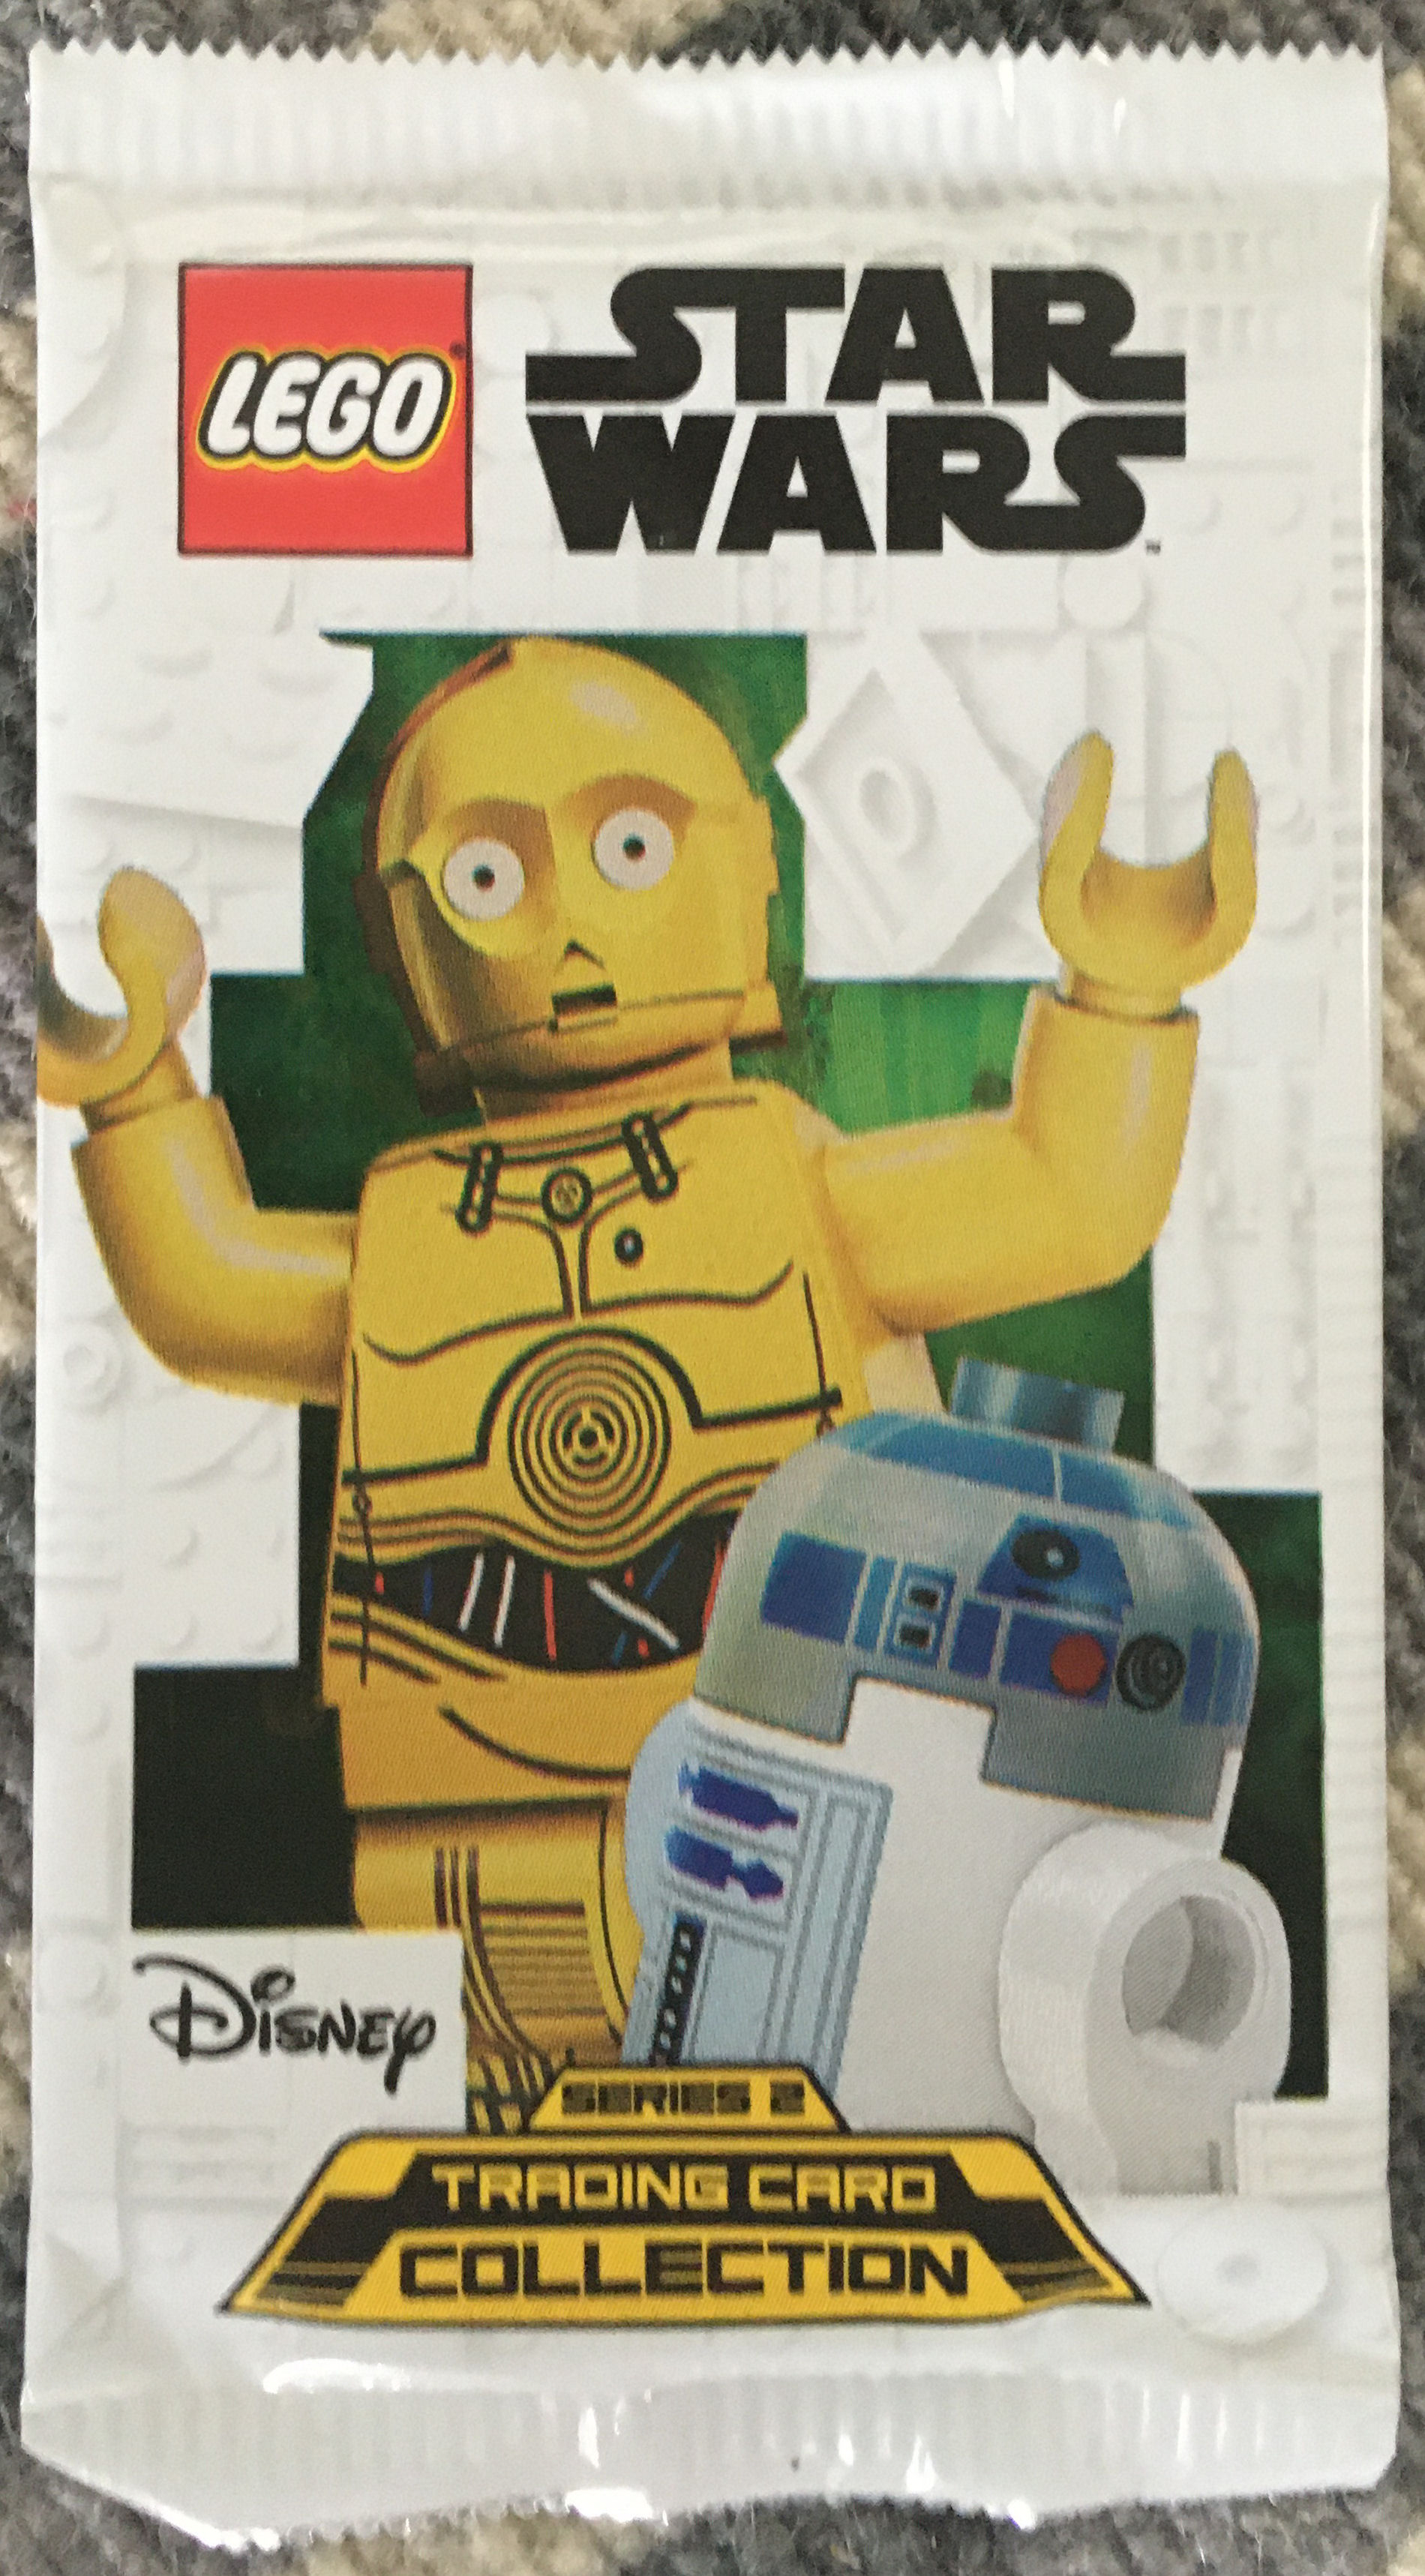 Lego ® Star Wars ™ Series 1 TRADING CARDS CARD 2-Triumphant Luke Skywalker 